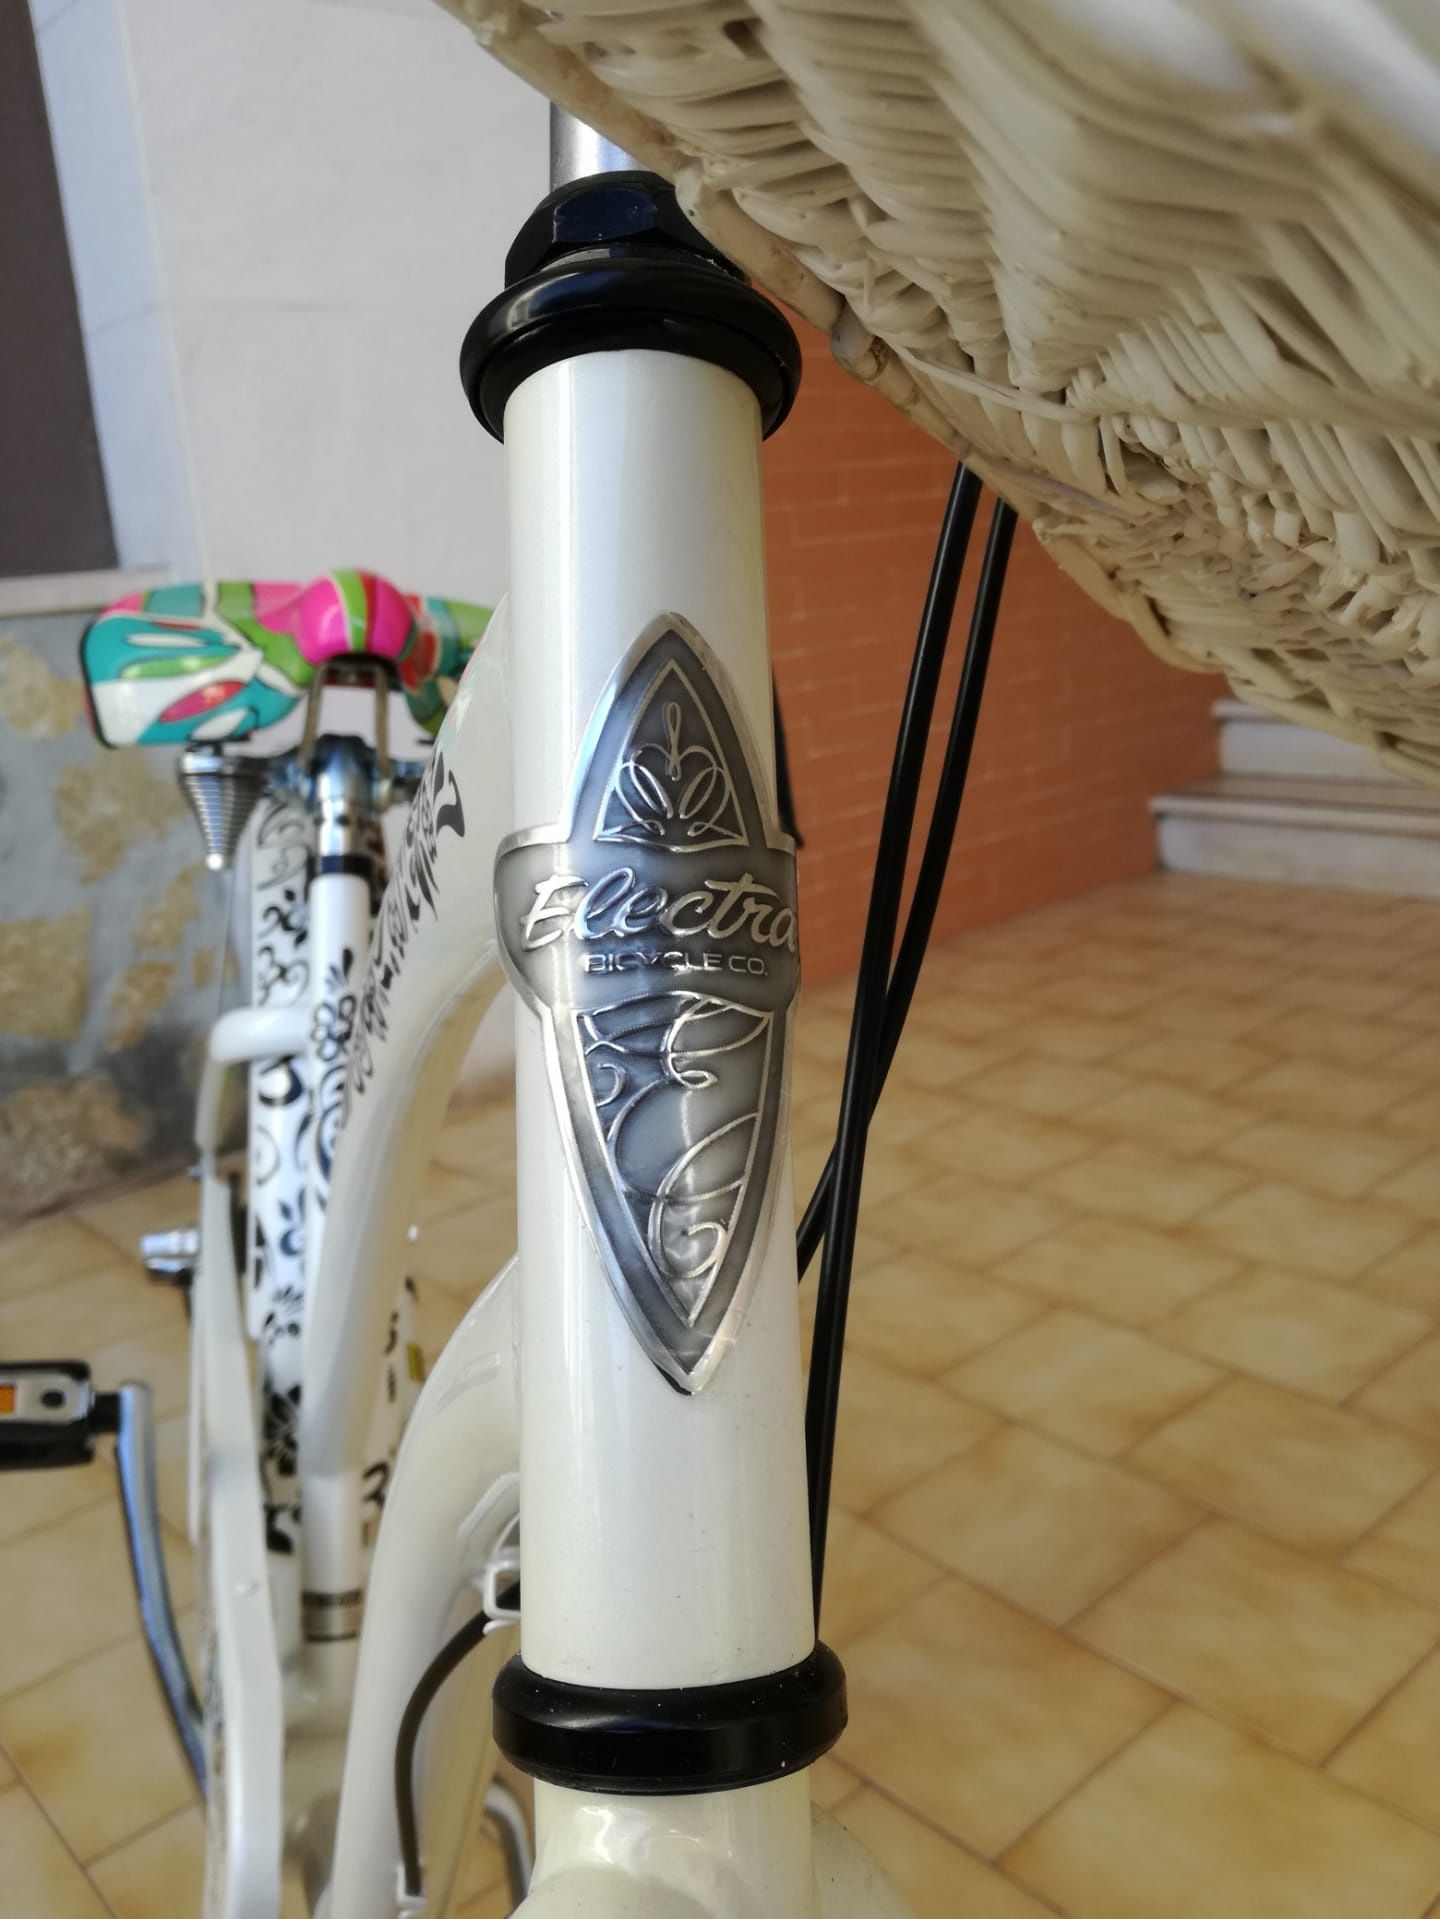 Bicicleta Electra made in USA, como nova